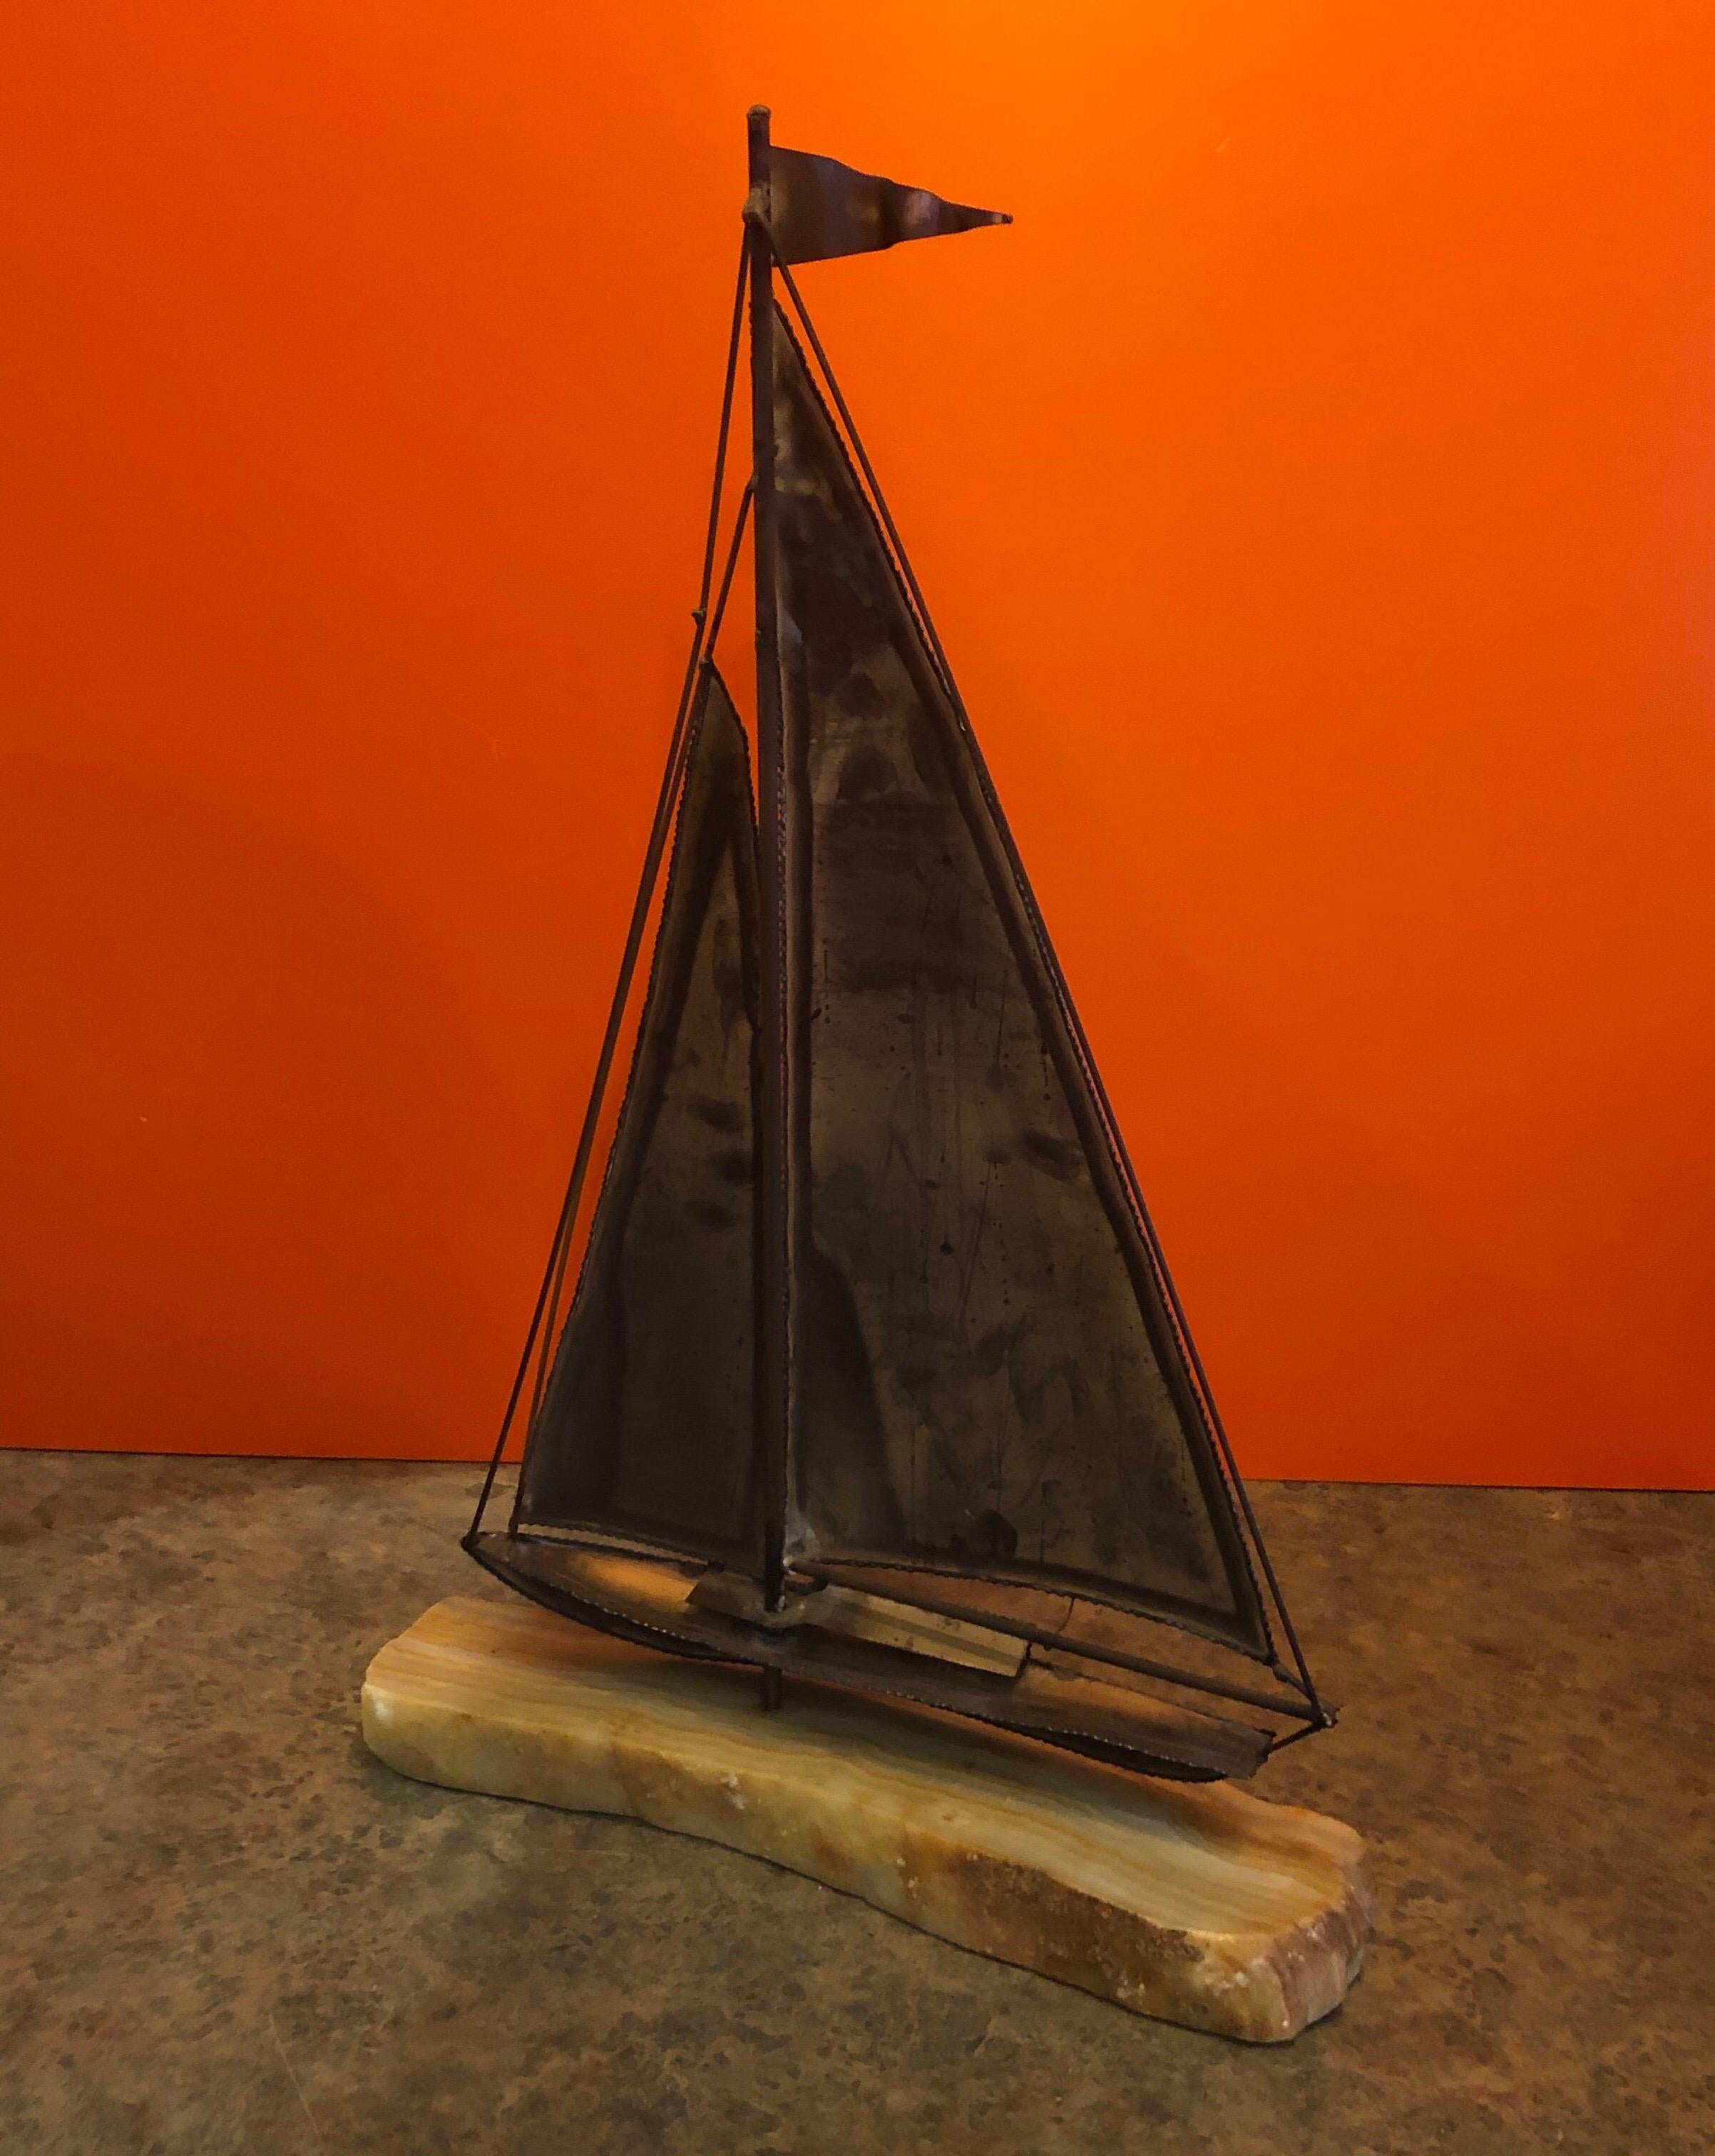 demott sailboat sculpture